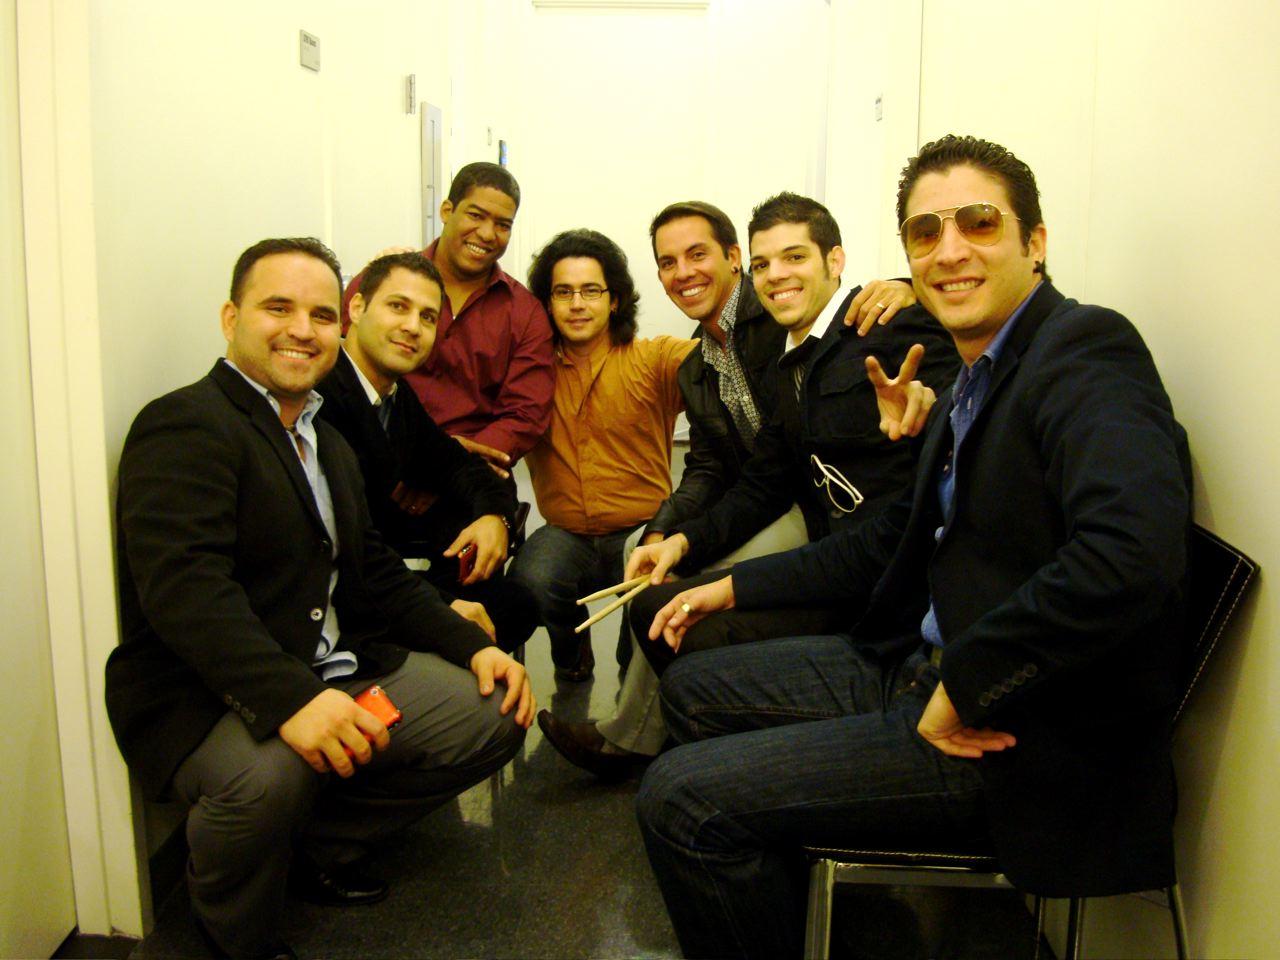 Tiempo Libre backstage at the WNYC studios. From left: Luis Beltran Castillo, Cristobal Ferrer Garcia, Leandro Gonzalez, Tebelio (Tony) Fonte, Jorge Gomez, Armanda (Pututi) Arce, Joaquin (El Kid) Diaz